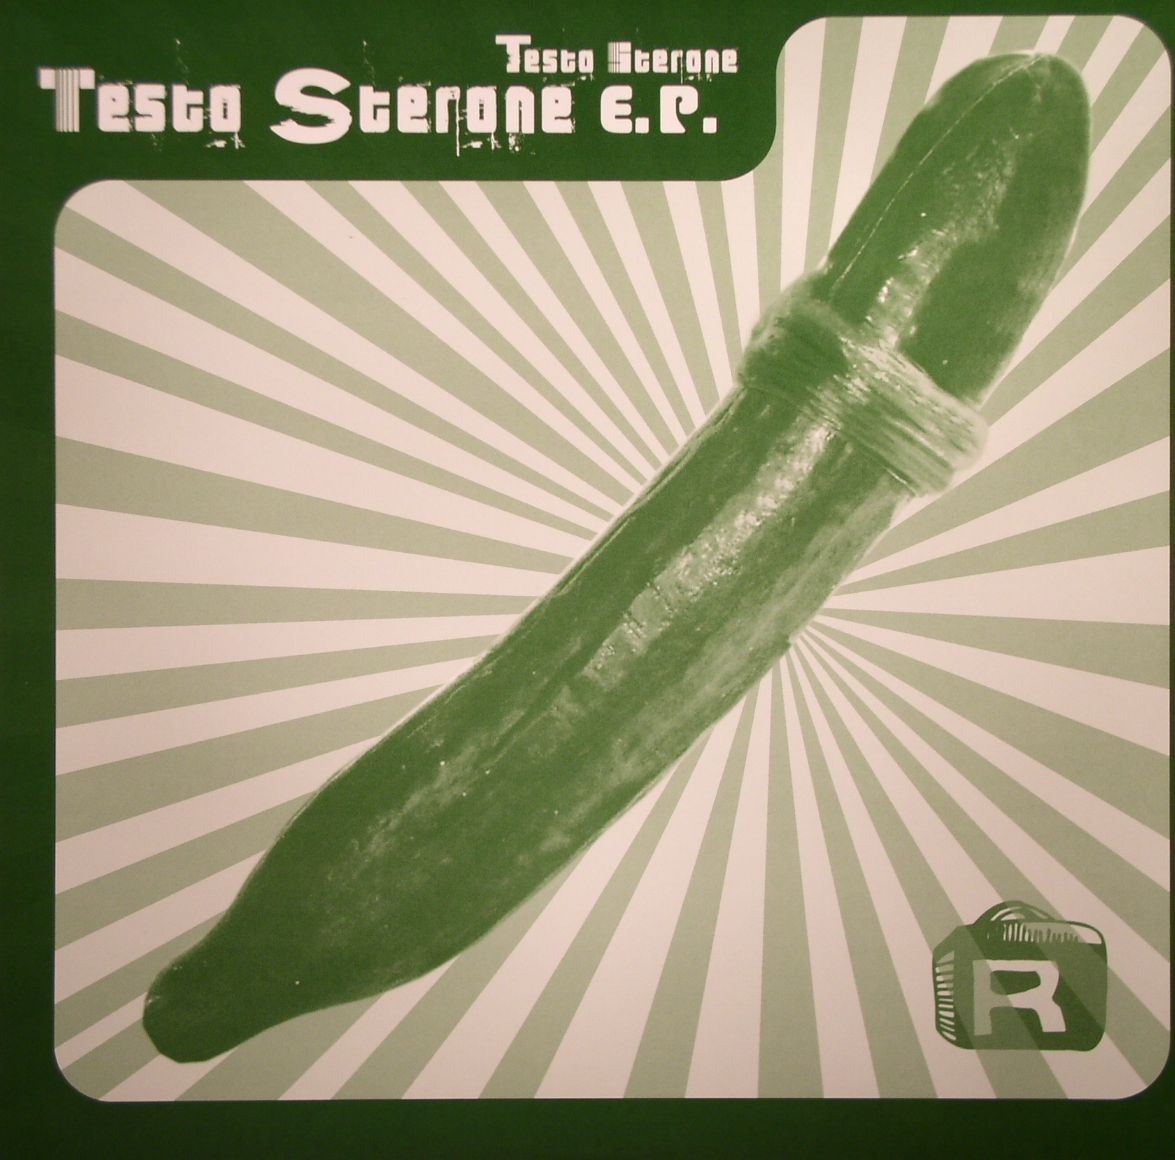 TESTO STERONE - Testo Sterone EP